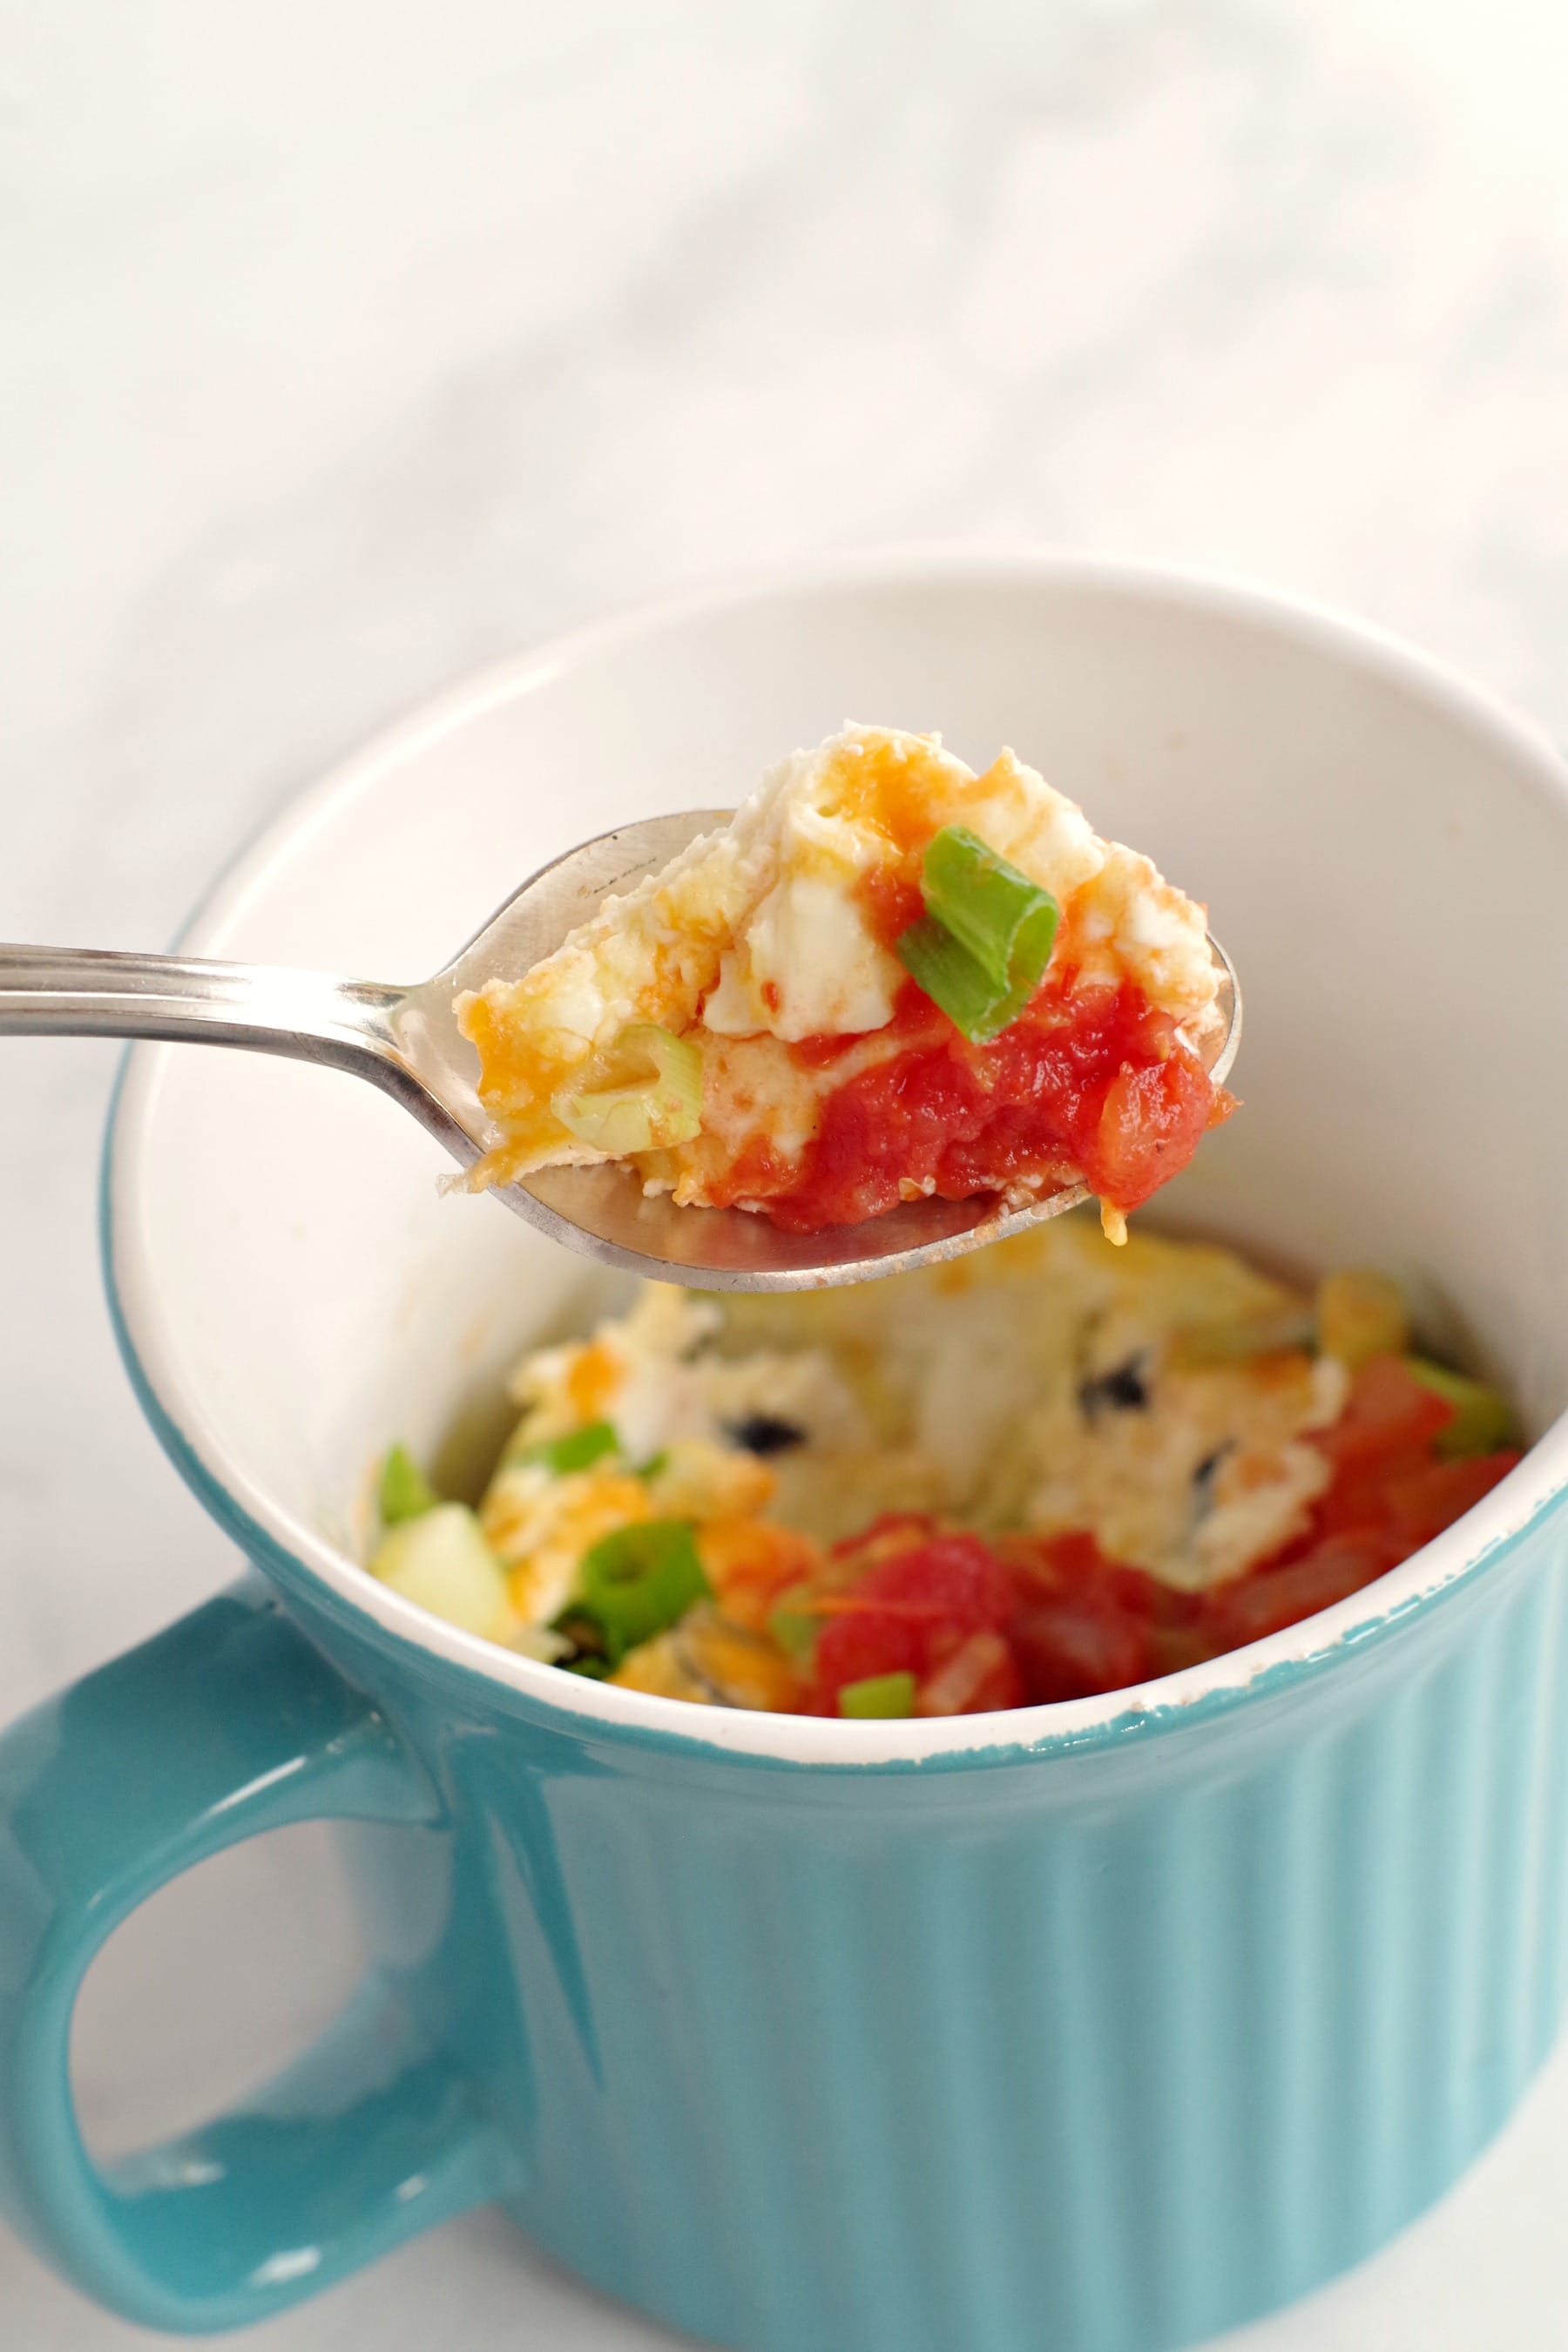 microwave mug omelette being held up on spoon over blue mug